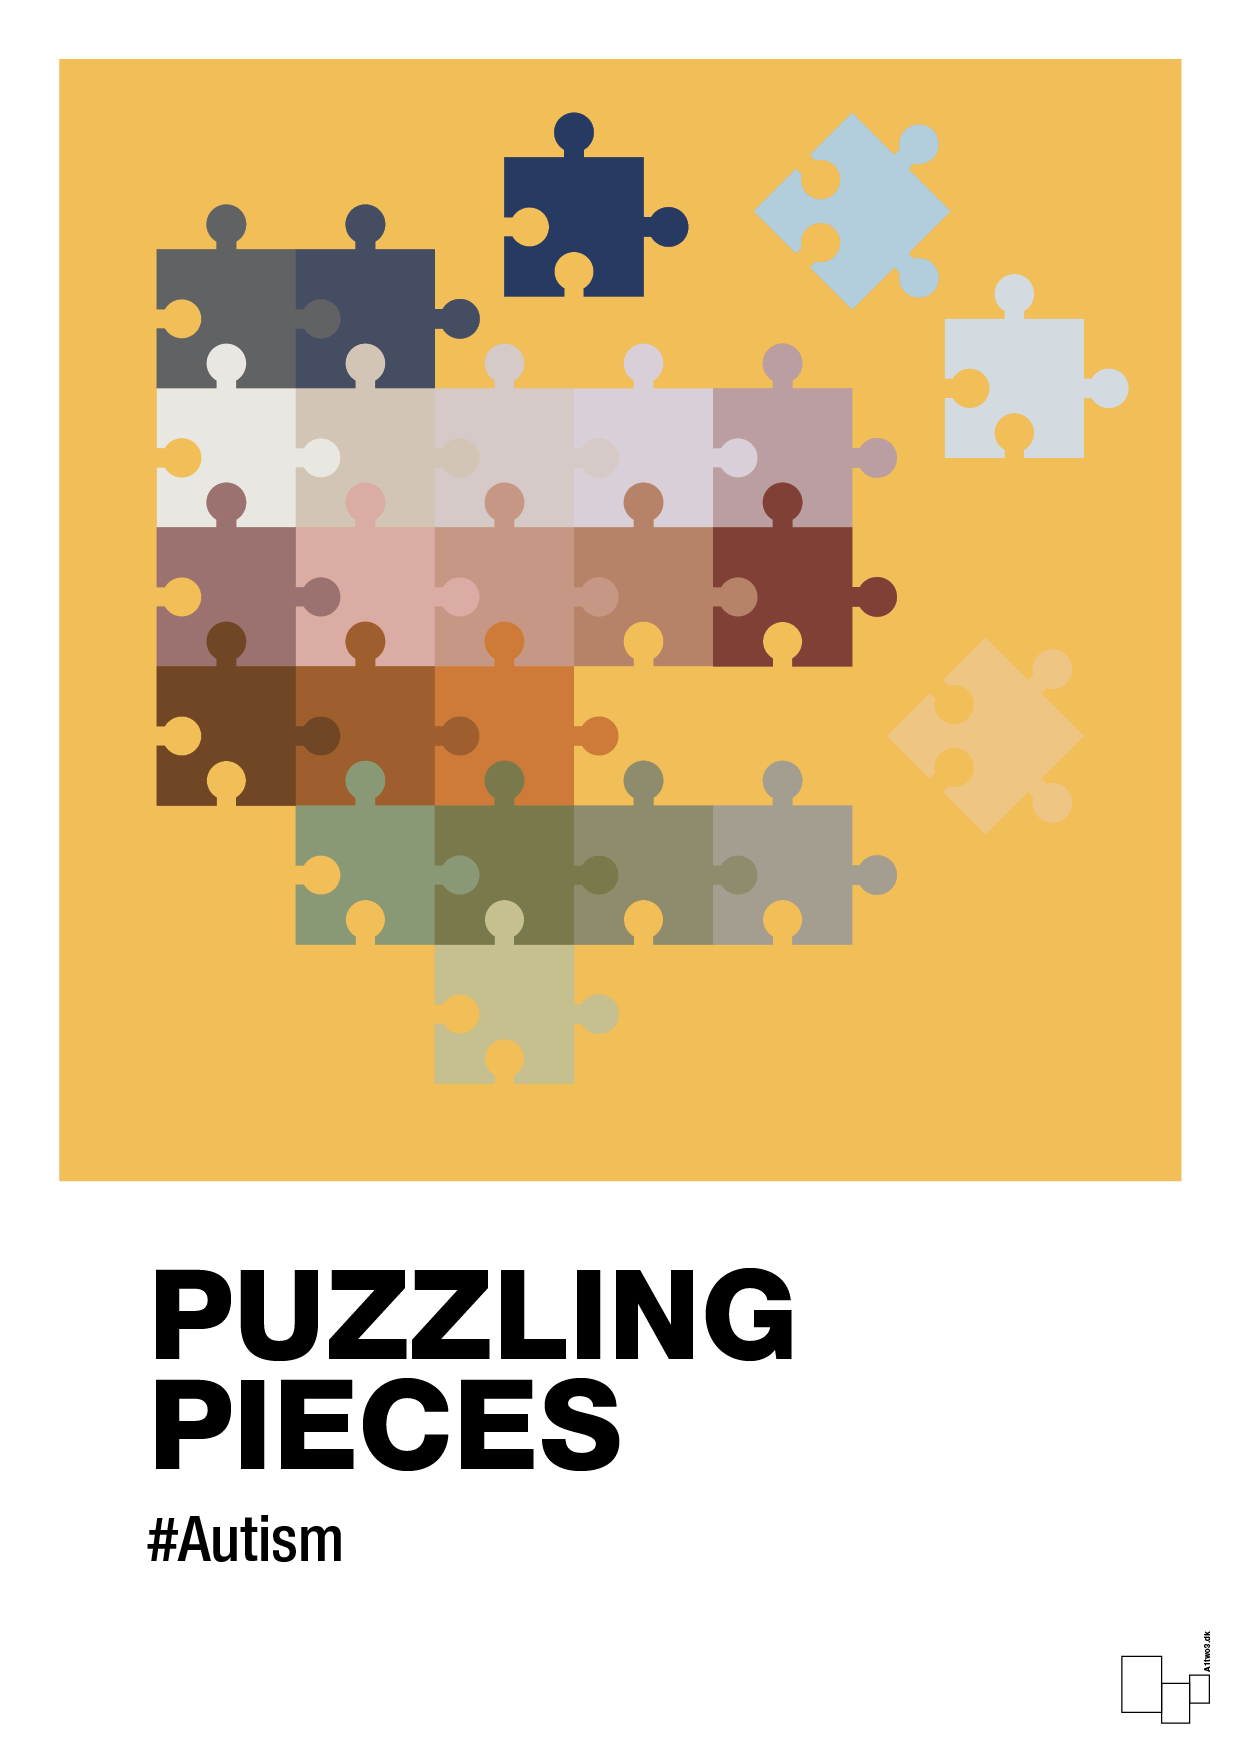 puzzling pieces - Plakat med Samfund i Honeycomb